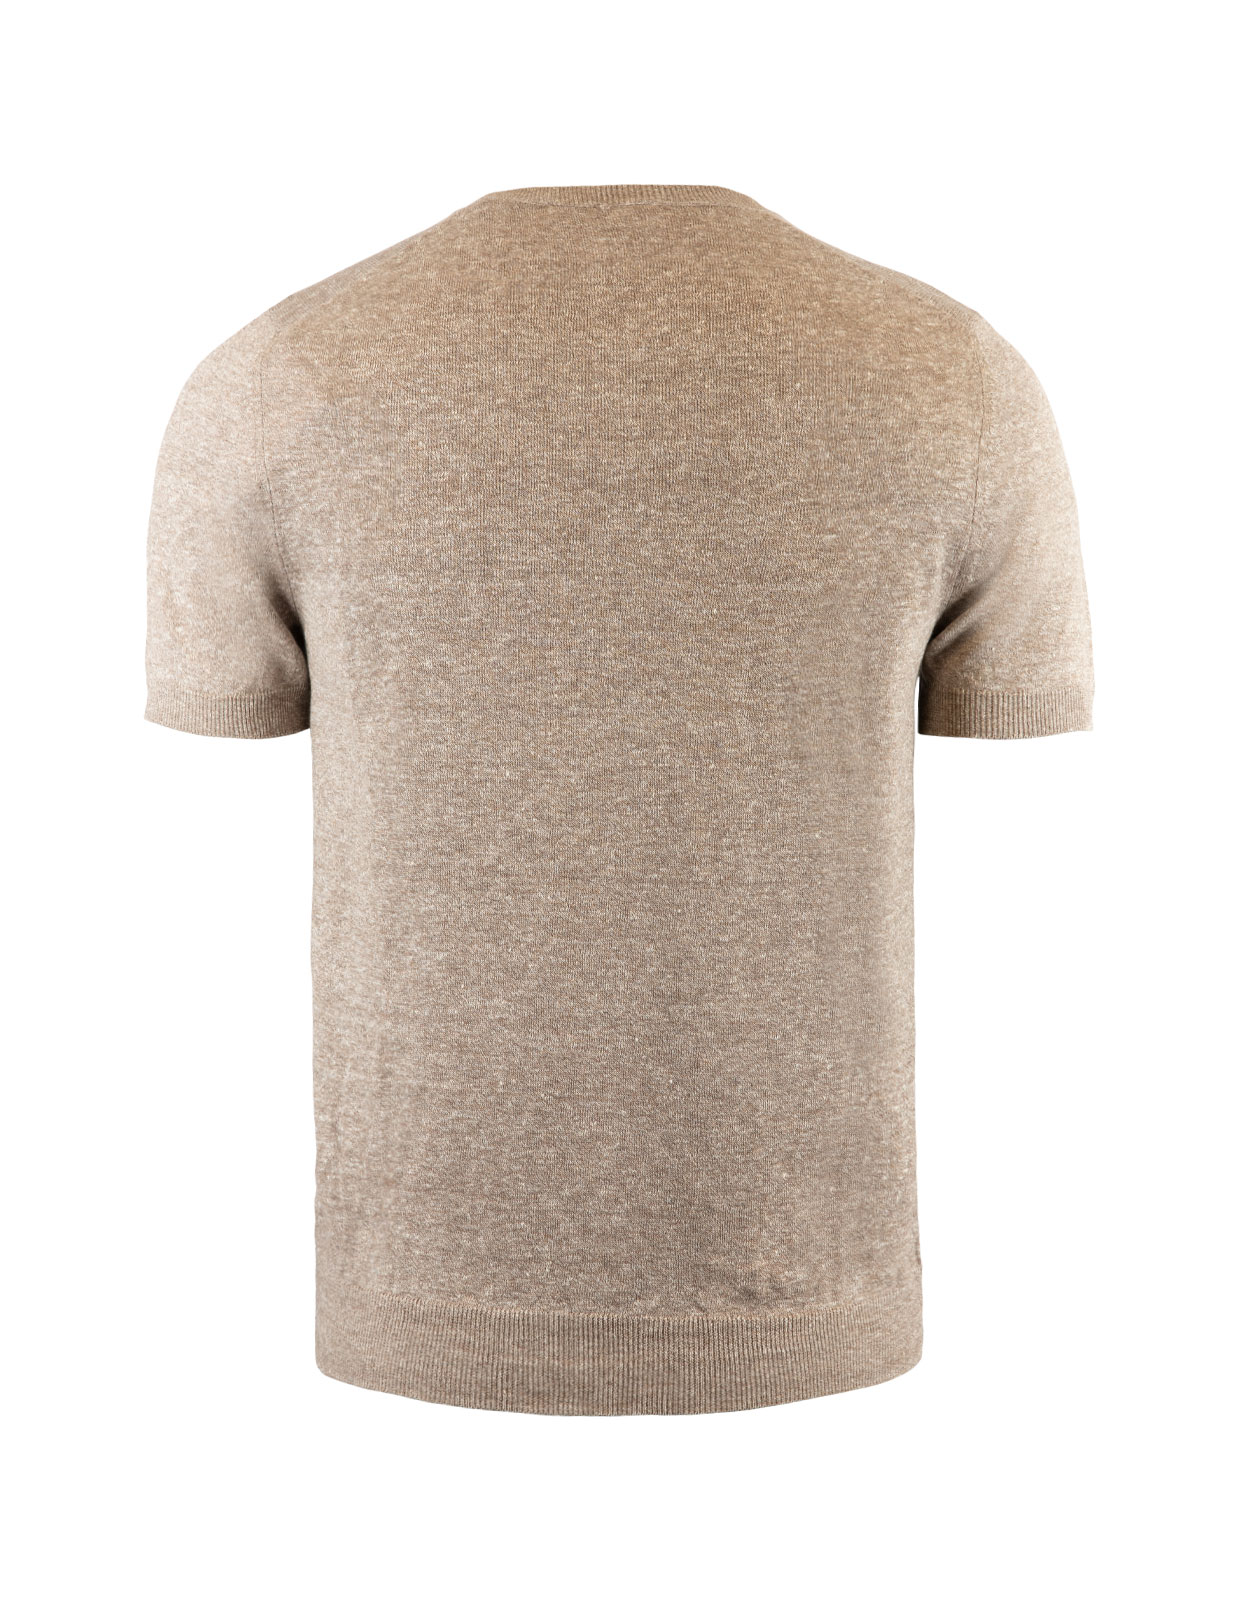 Luxury T-shirt Linen Cotton Sand